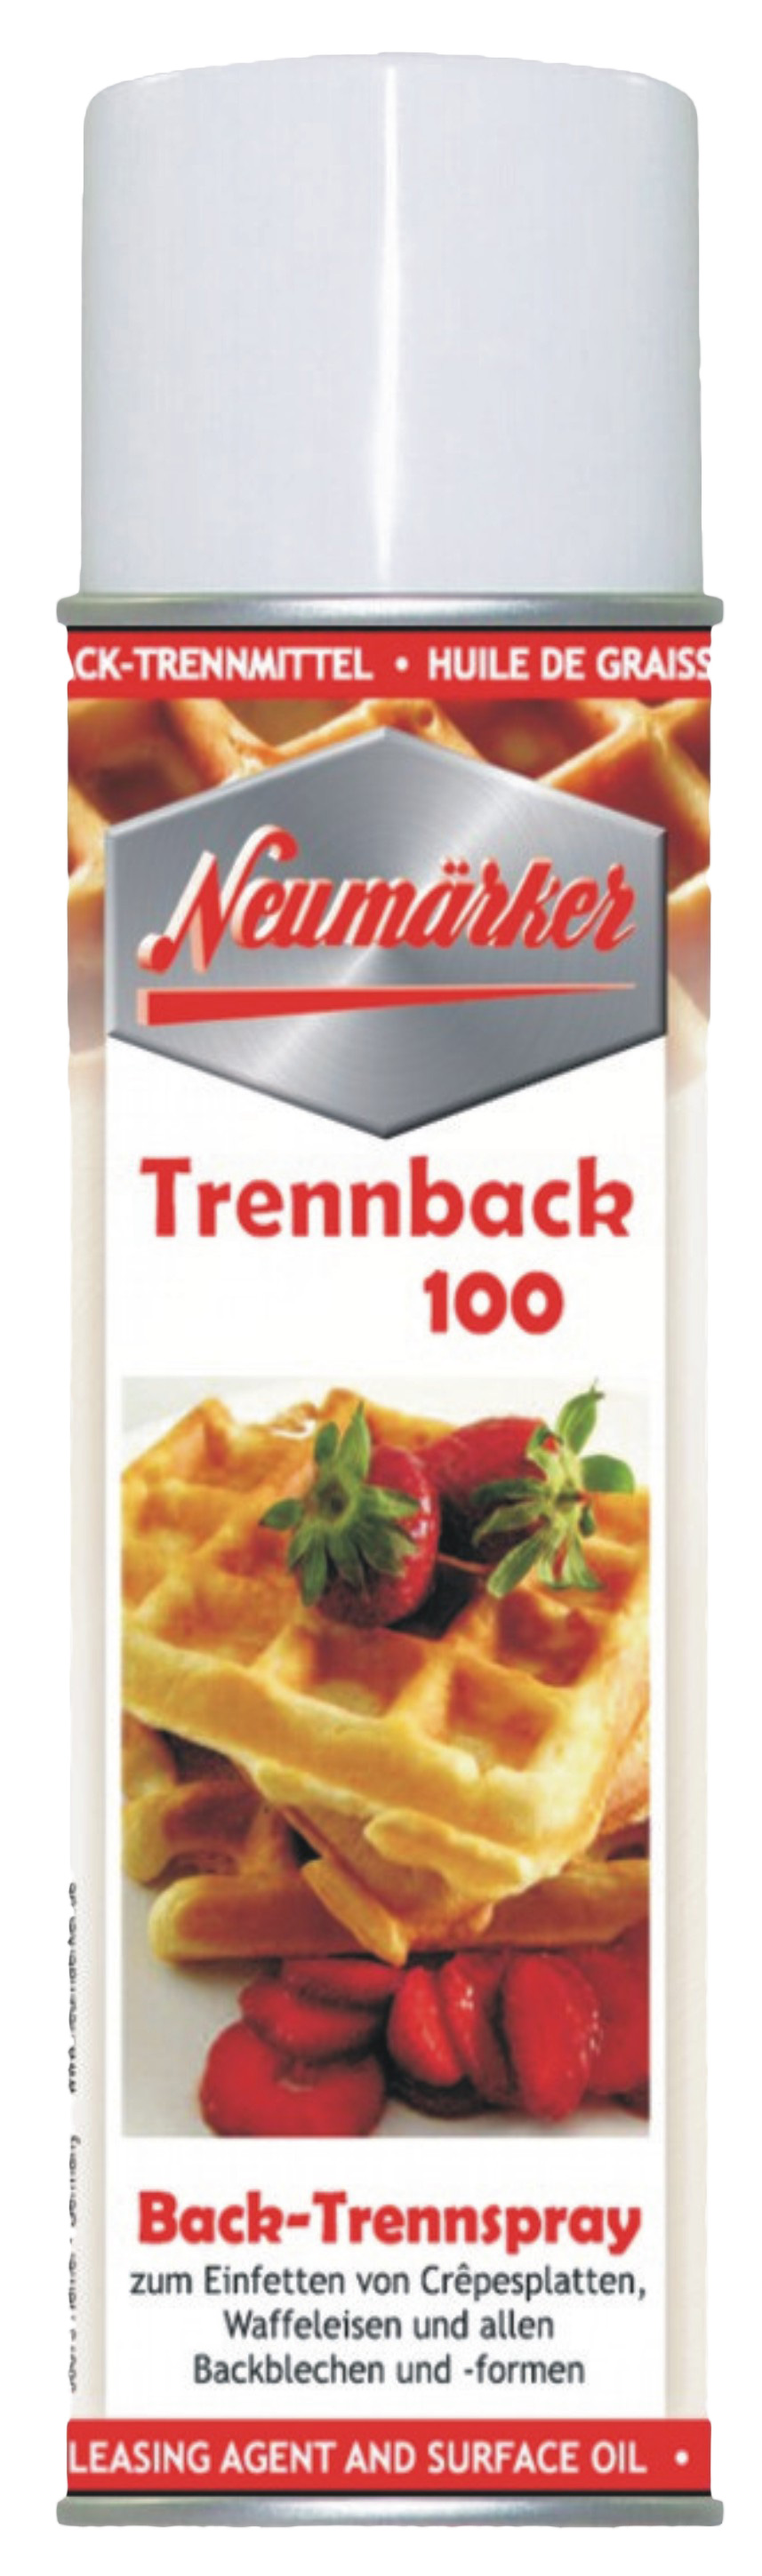 Trennback 100 